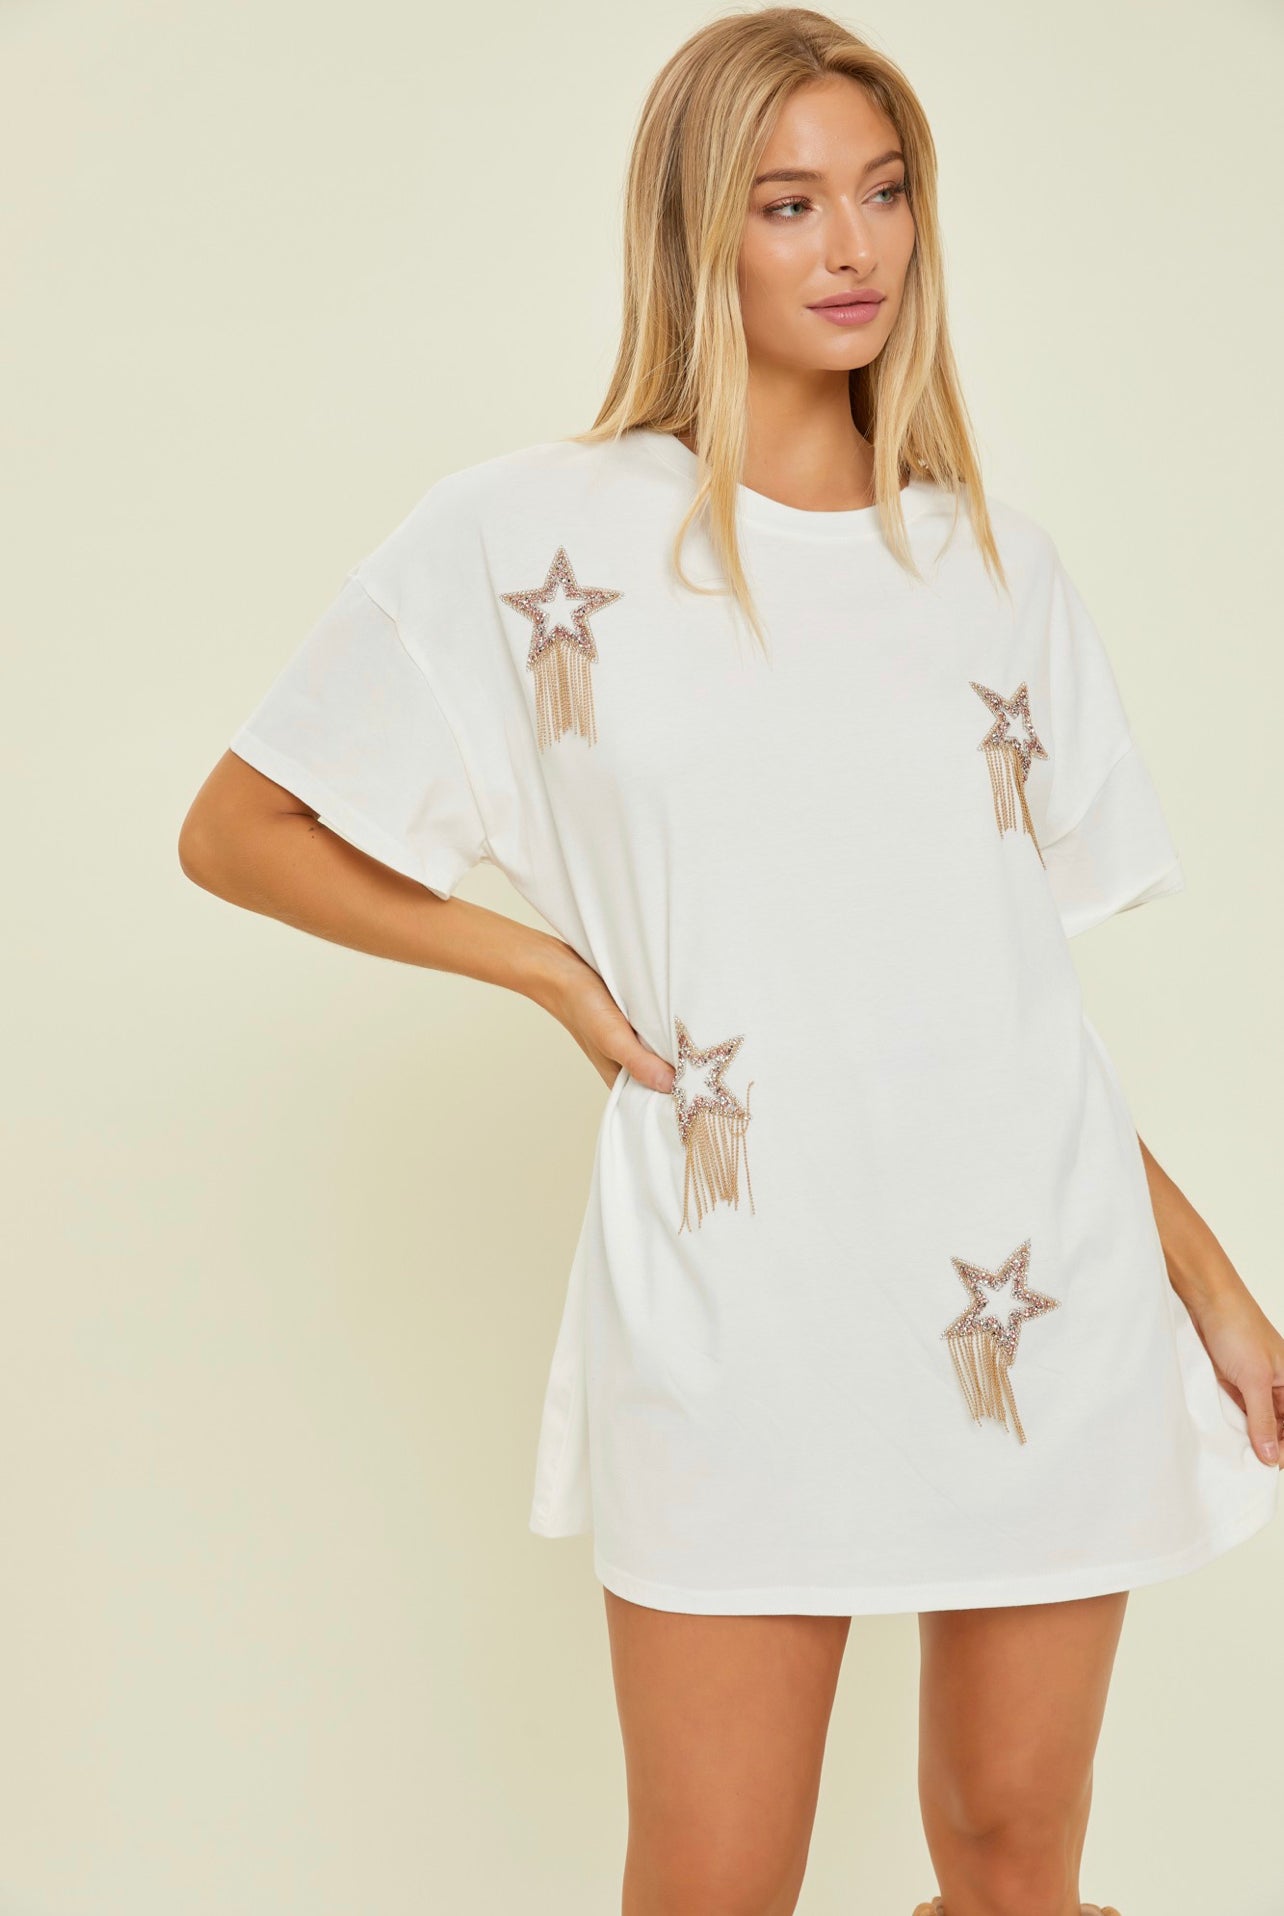 She’s a Star T-shirt Dress